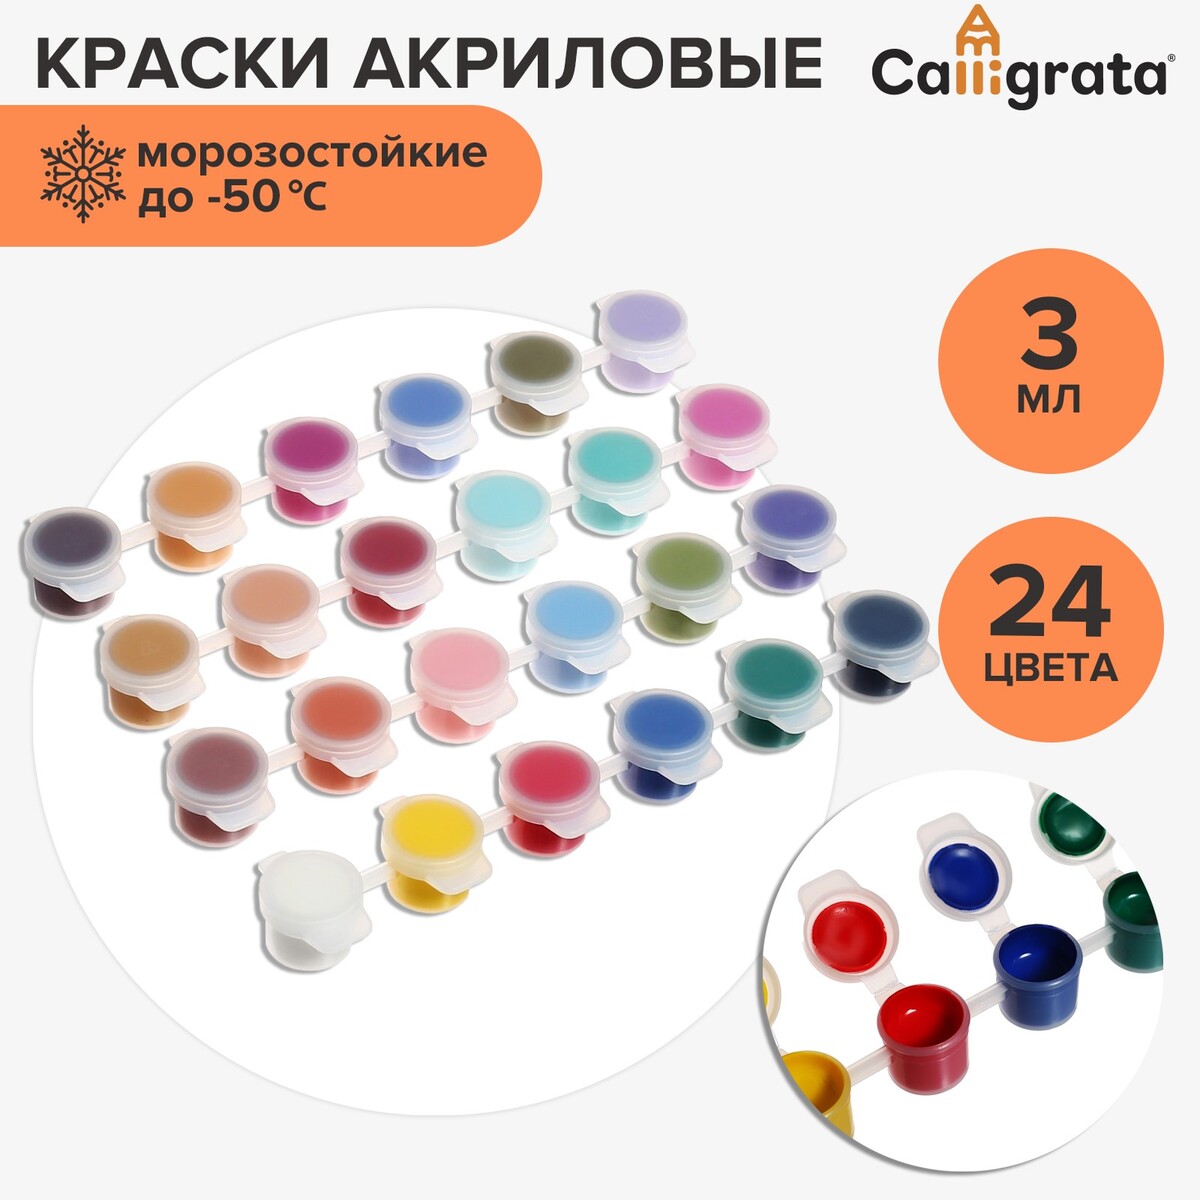 Краска акриловая, набор 24 цвета х 3 мл, calligrata, морозостойкие, в пакете Calligrata 06117595 - фото 1